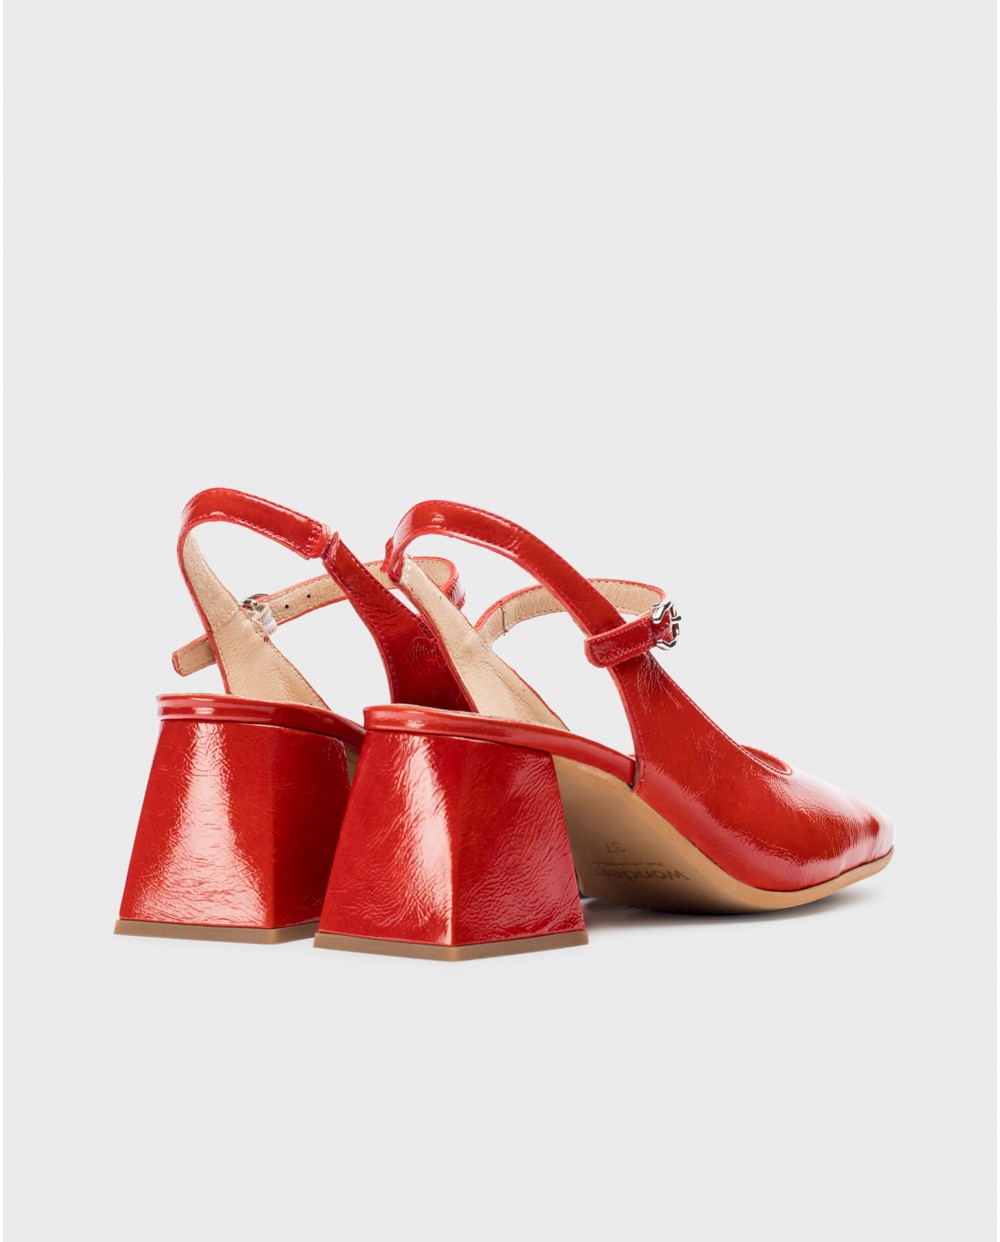 Red Jane slingback sandals